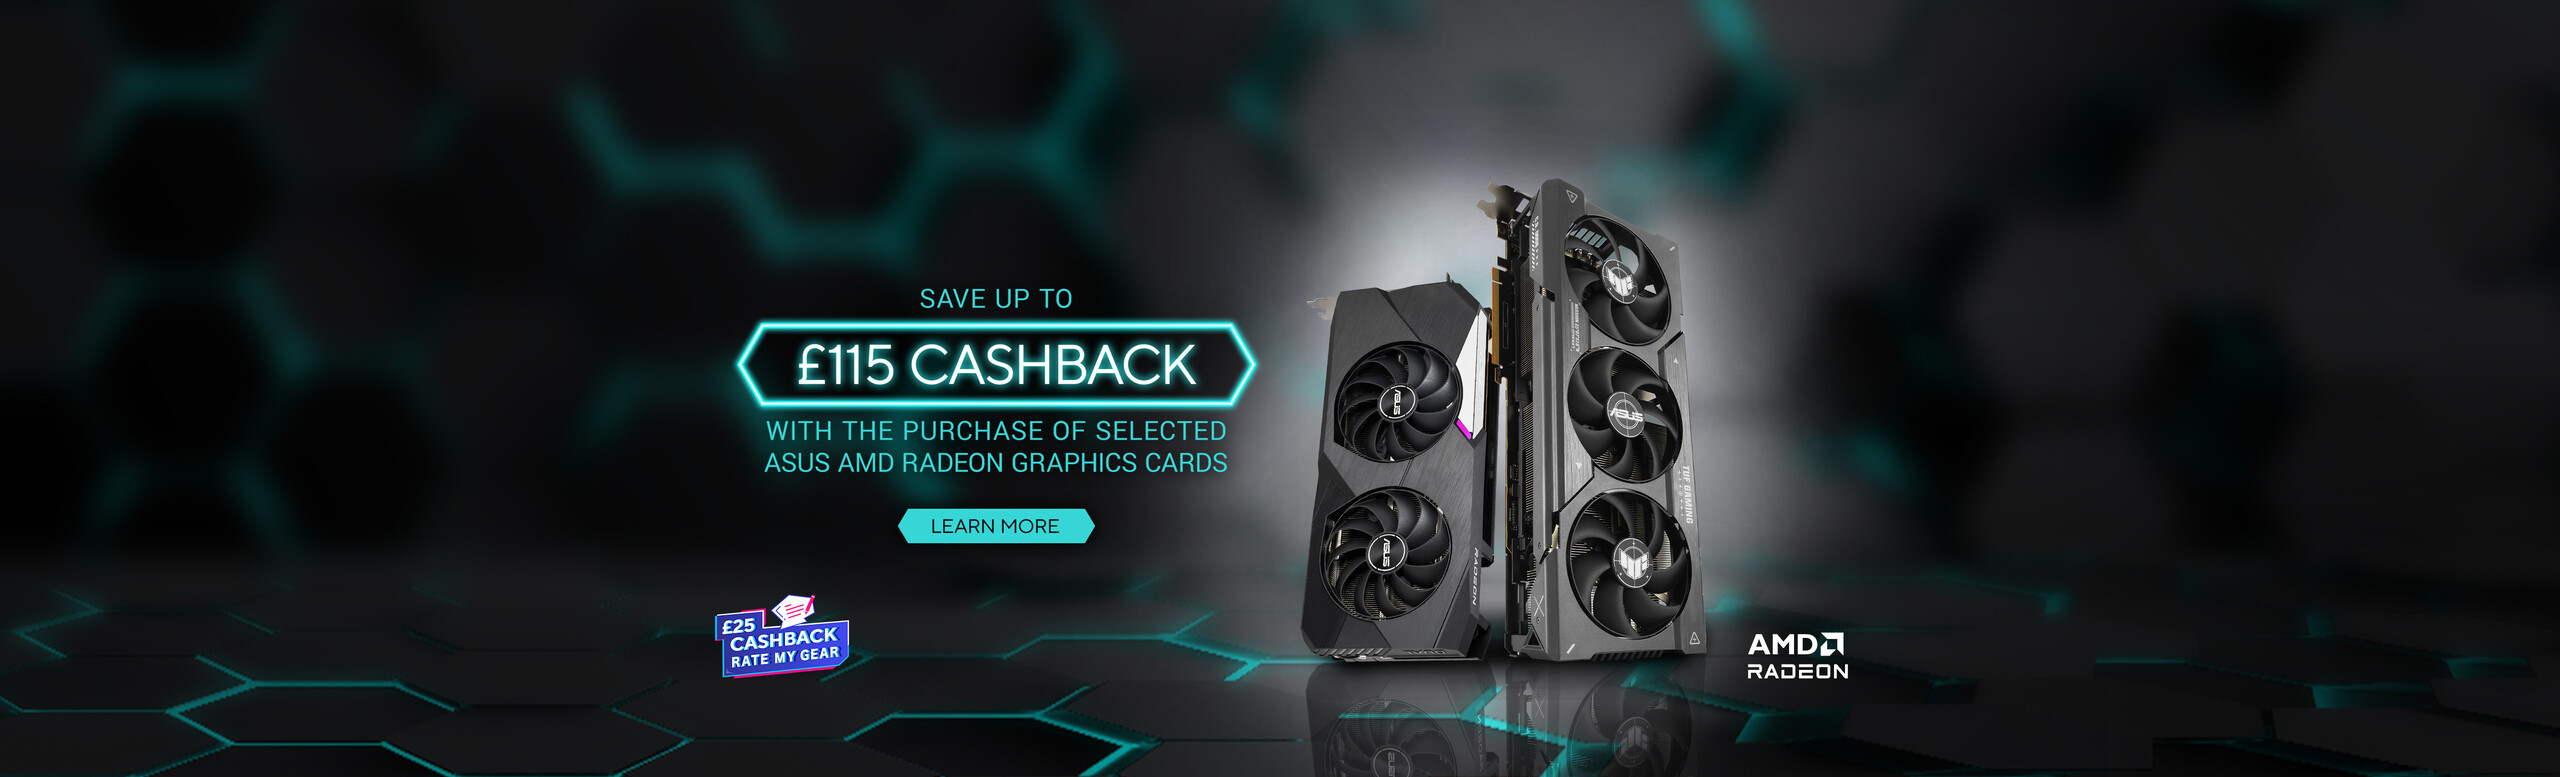 Up to £115 cashback on ASUS AMD Radeon graphics